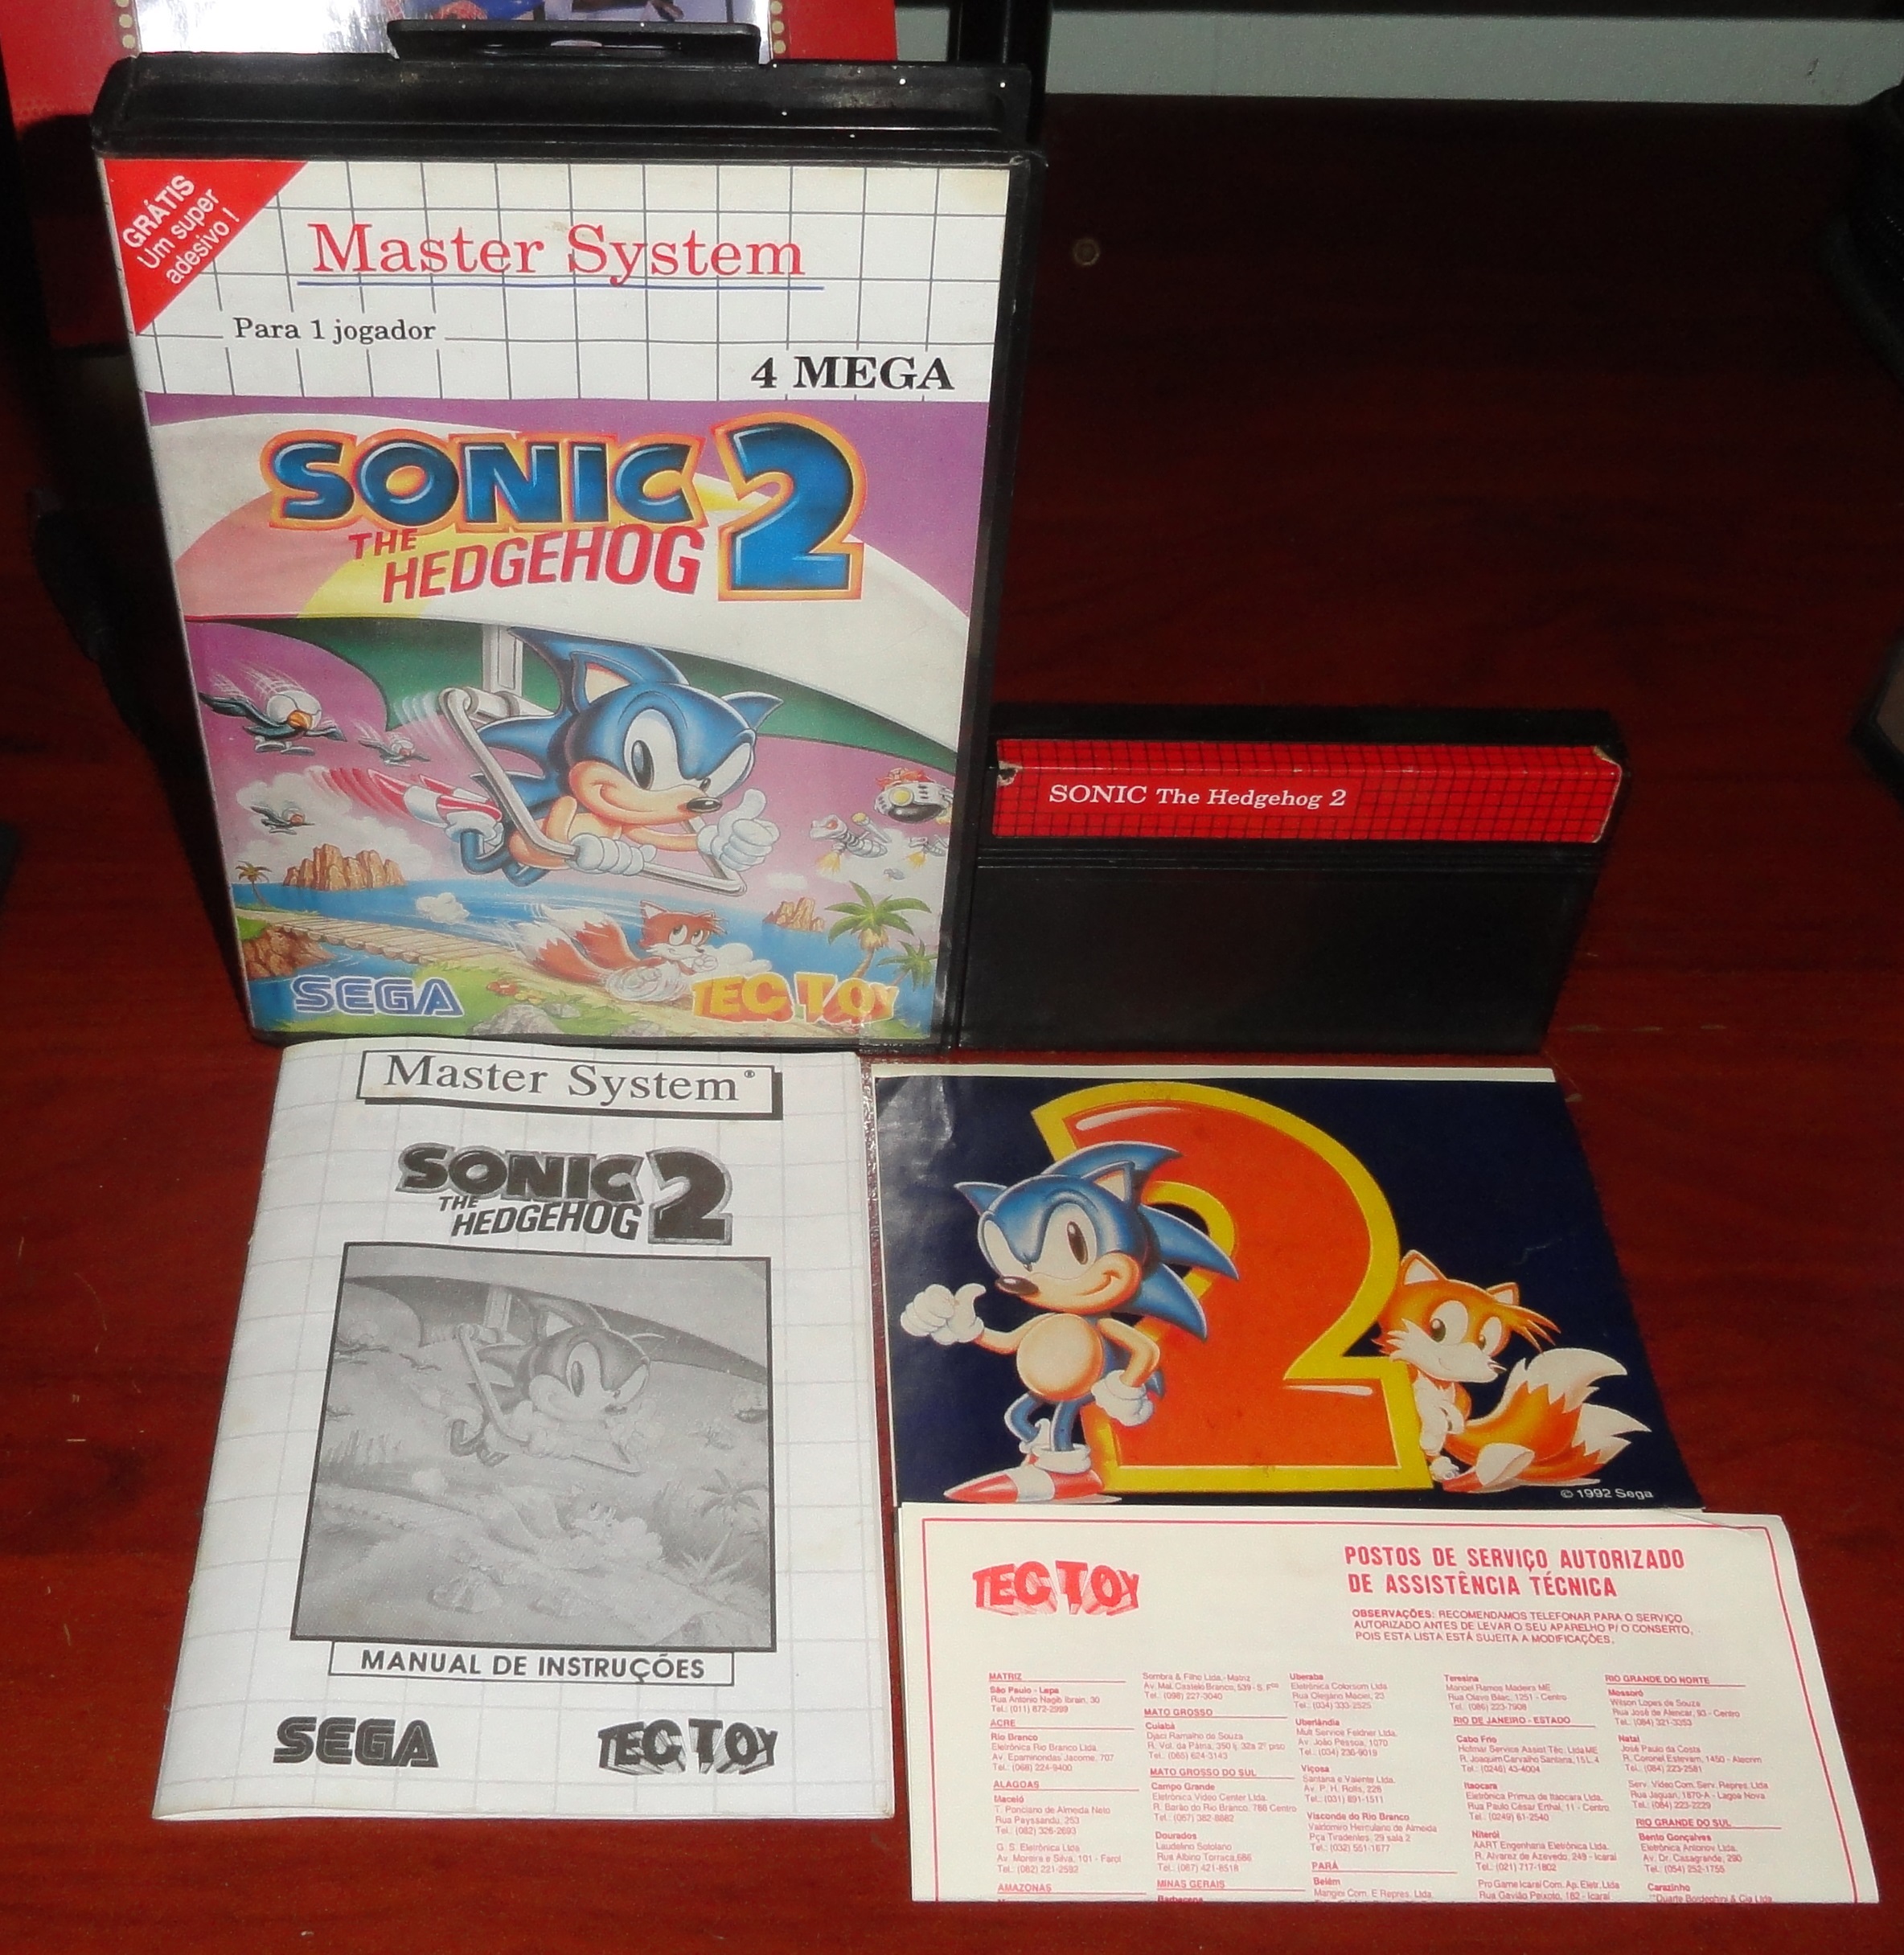 Sonic 2 Master System Capa.jpg